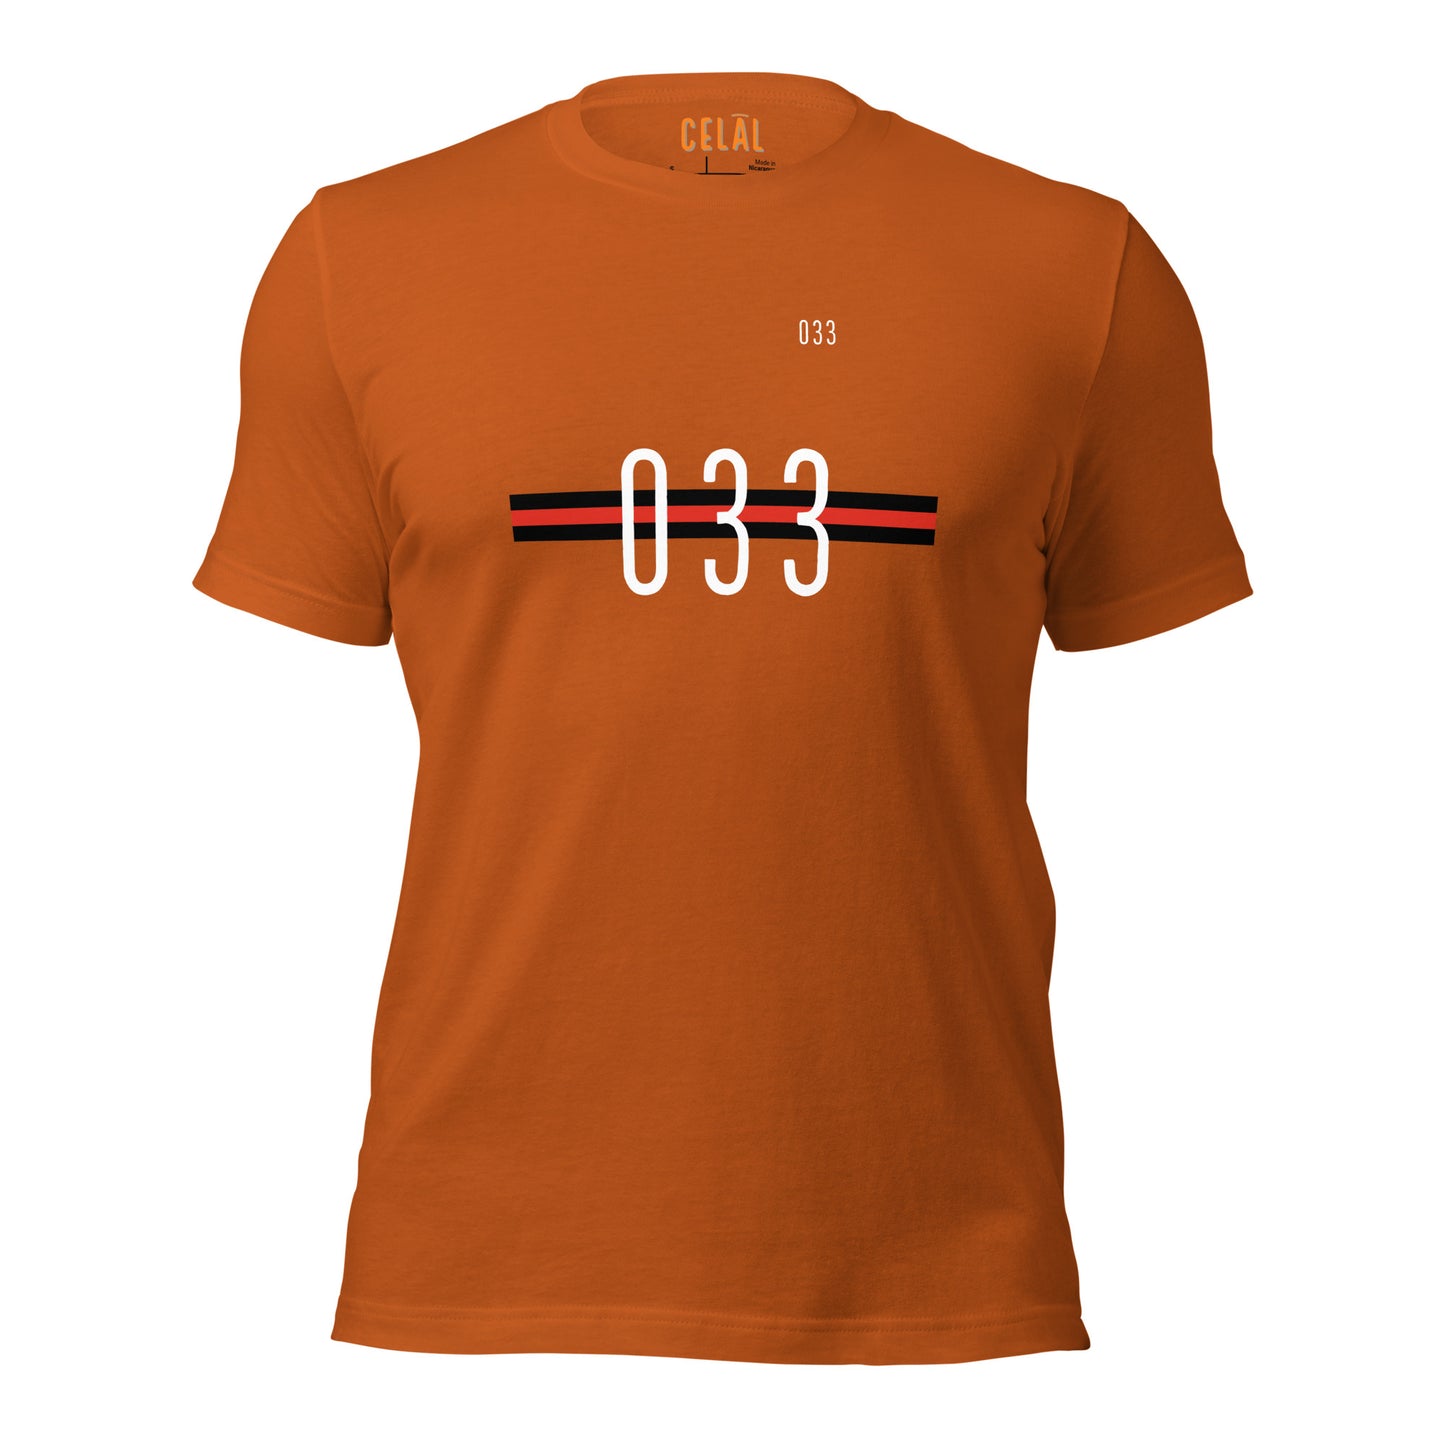 033 Unisex t-shirt